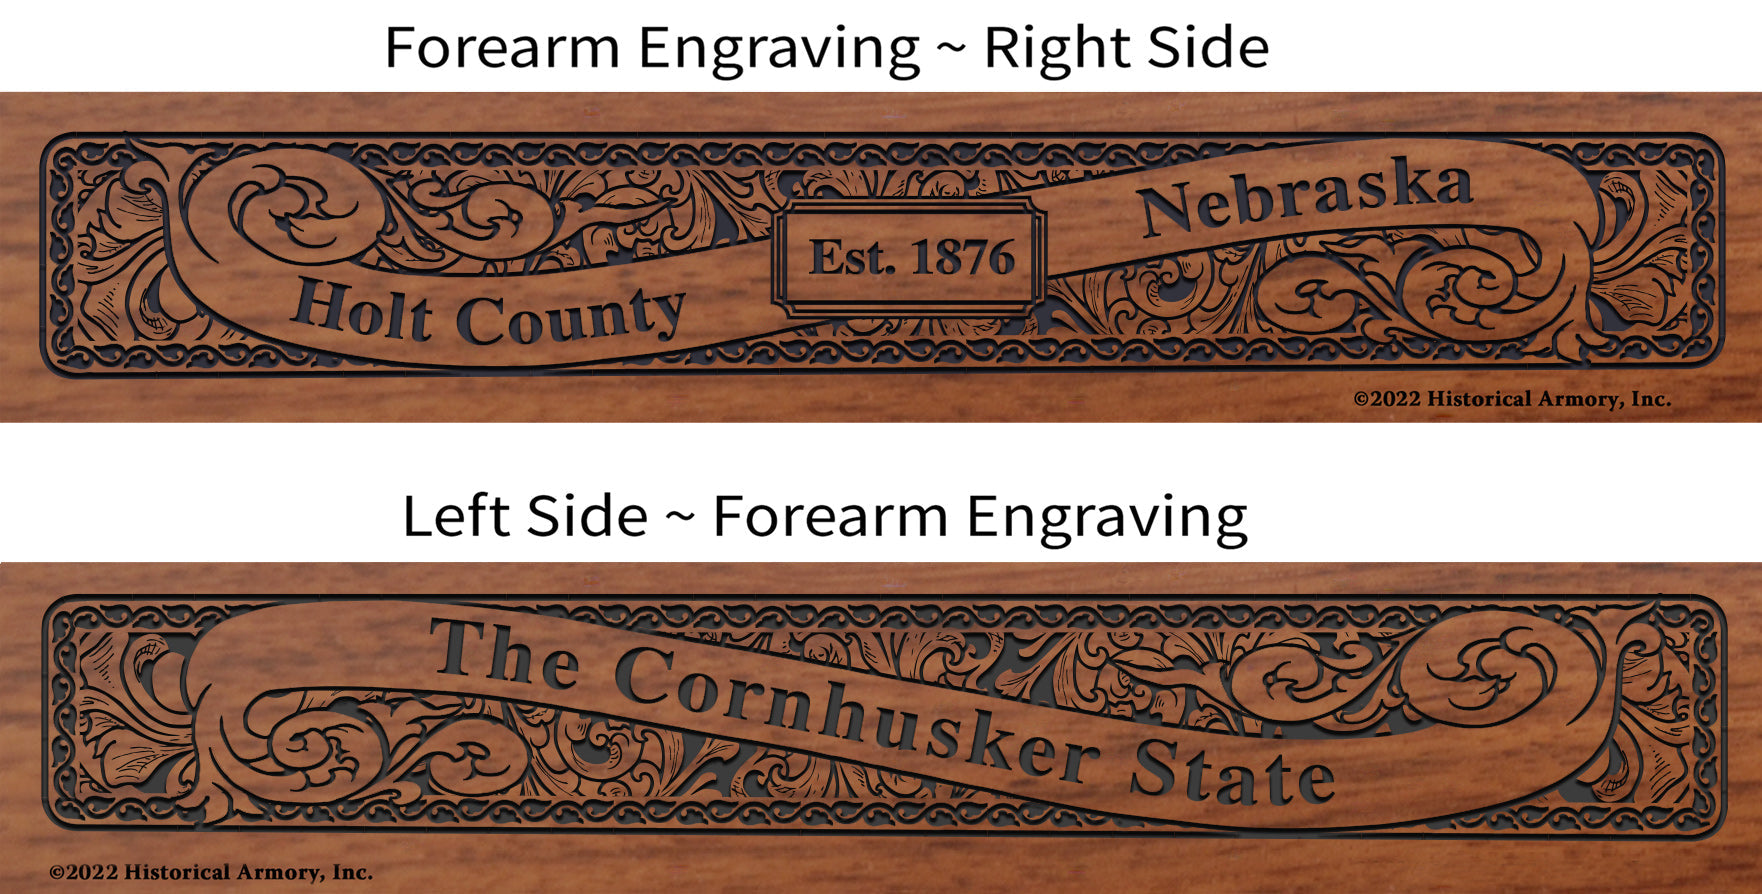 Holt County Nebraska Engraved Rifle Forearm